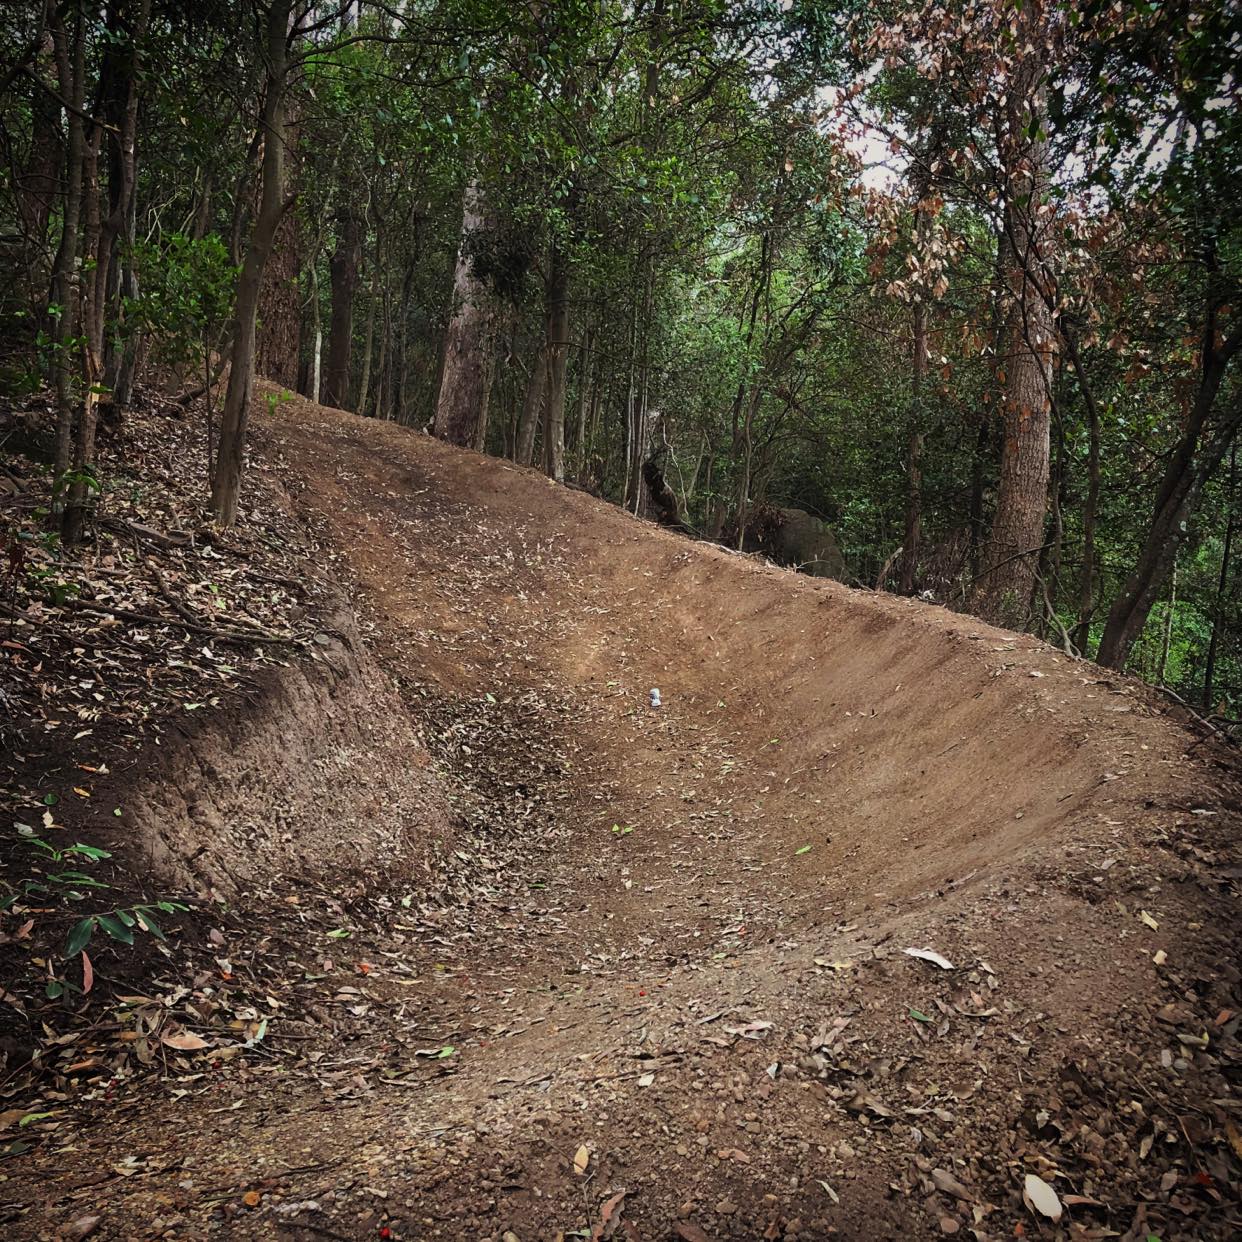 Mount Keira bike track in Wollongong